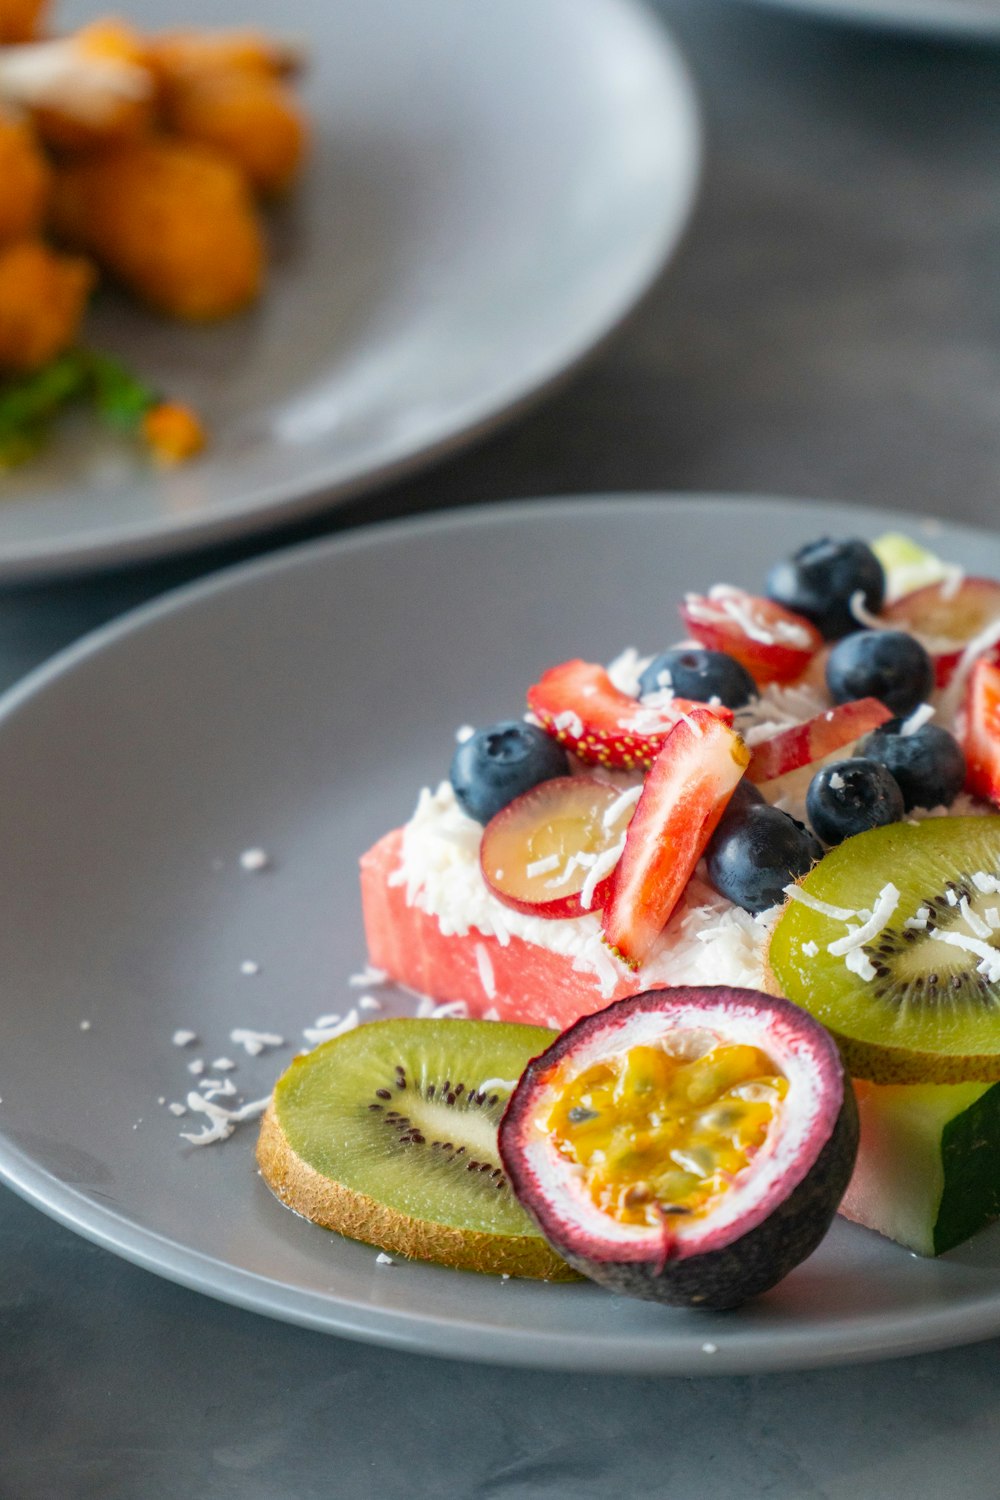 shallow focus photo of fruit salad on saucer